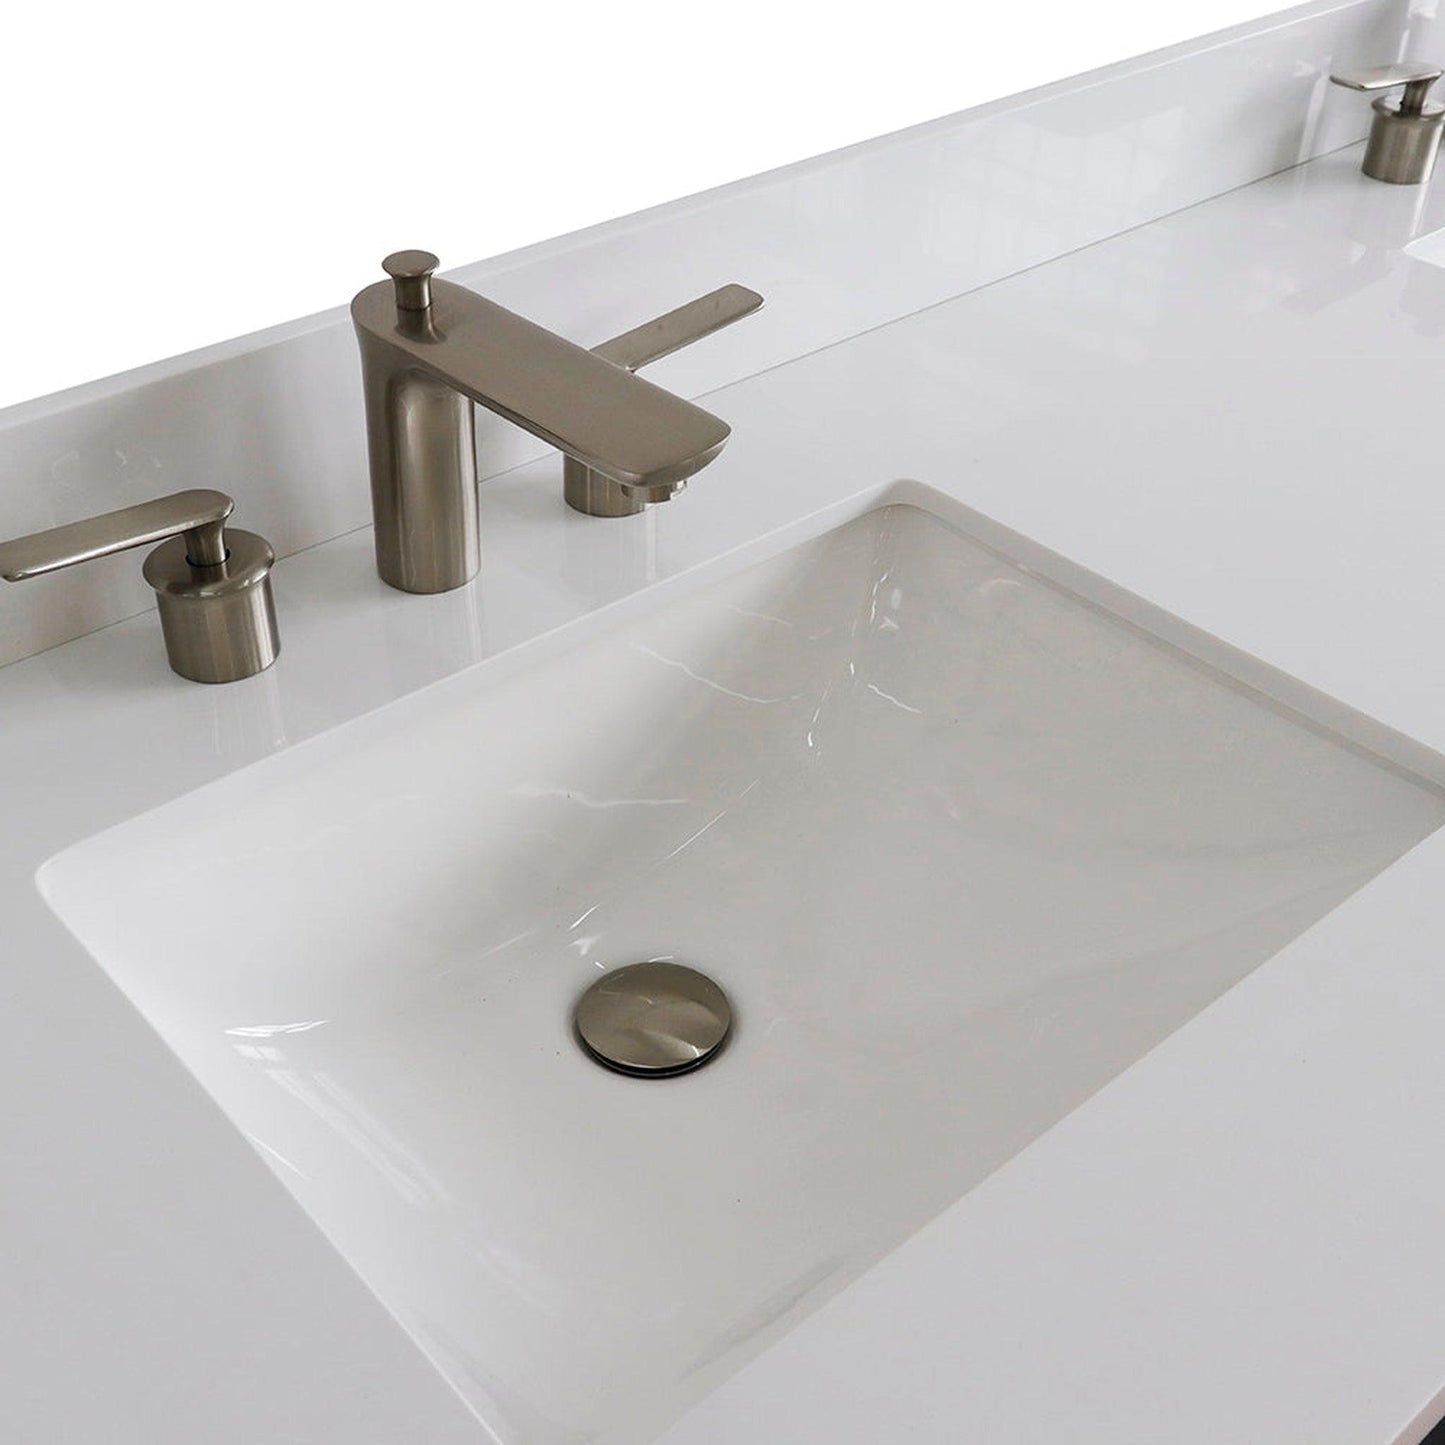 Bellaterra Home Terni 61" 4-Door 3-Drawer Dark Gray Freestanding Vanity Set With Ceramic Double Undermount Rectangular Sink And White Quartz Top